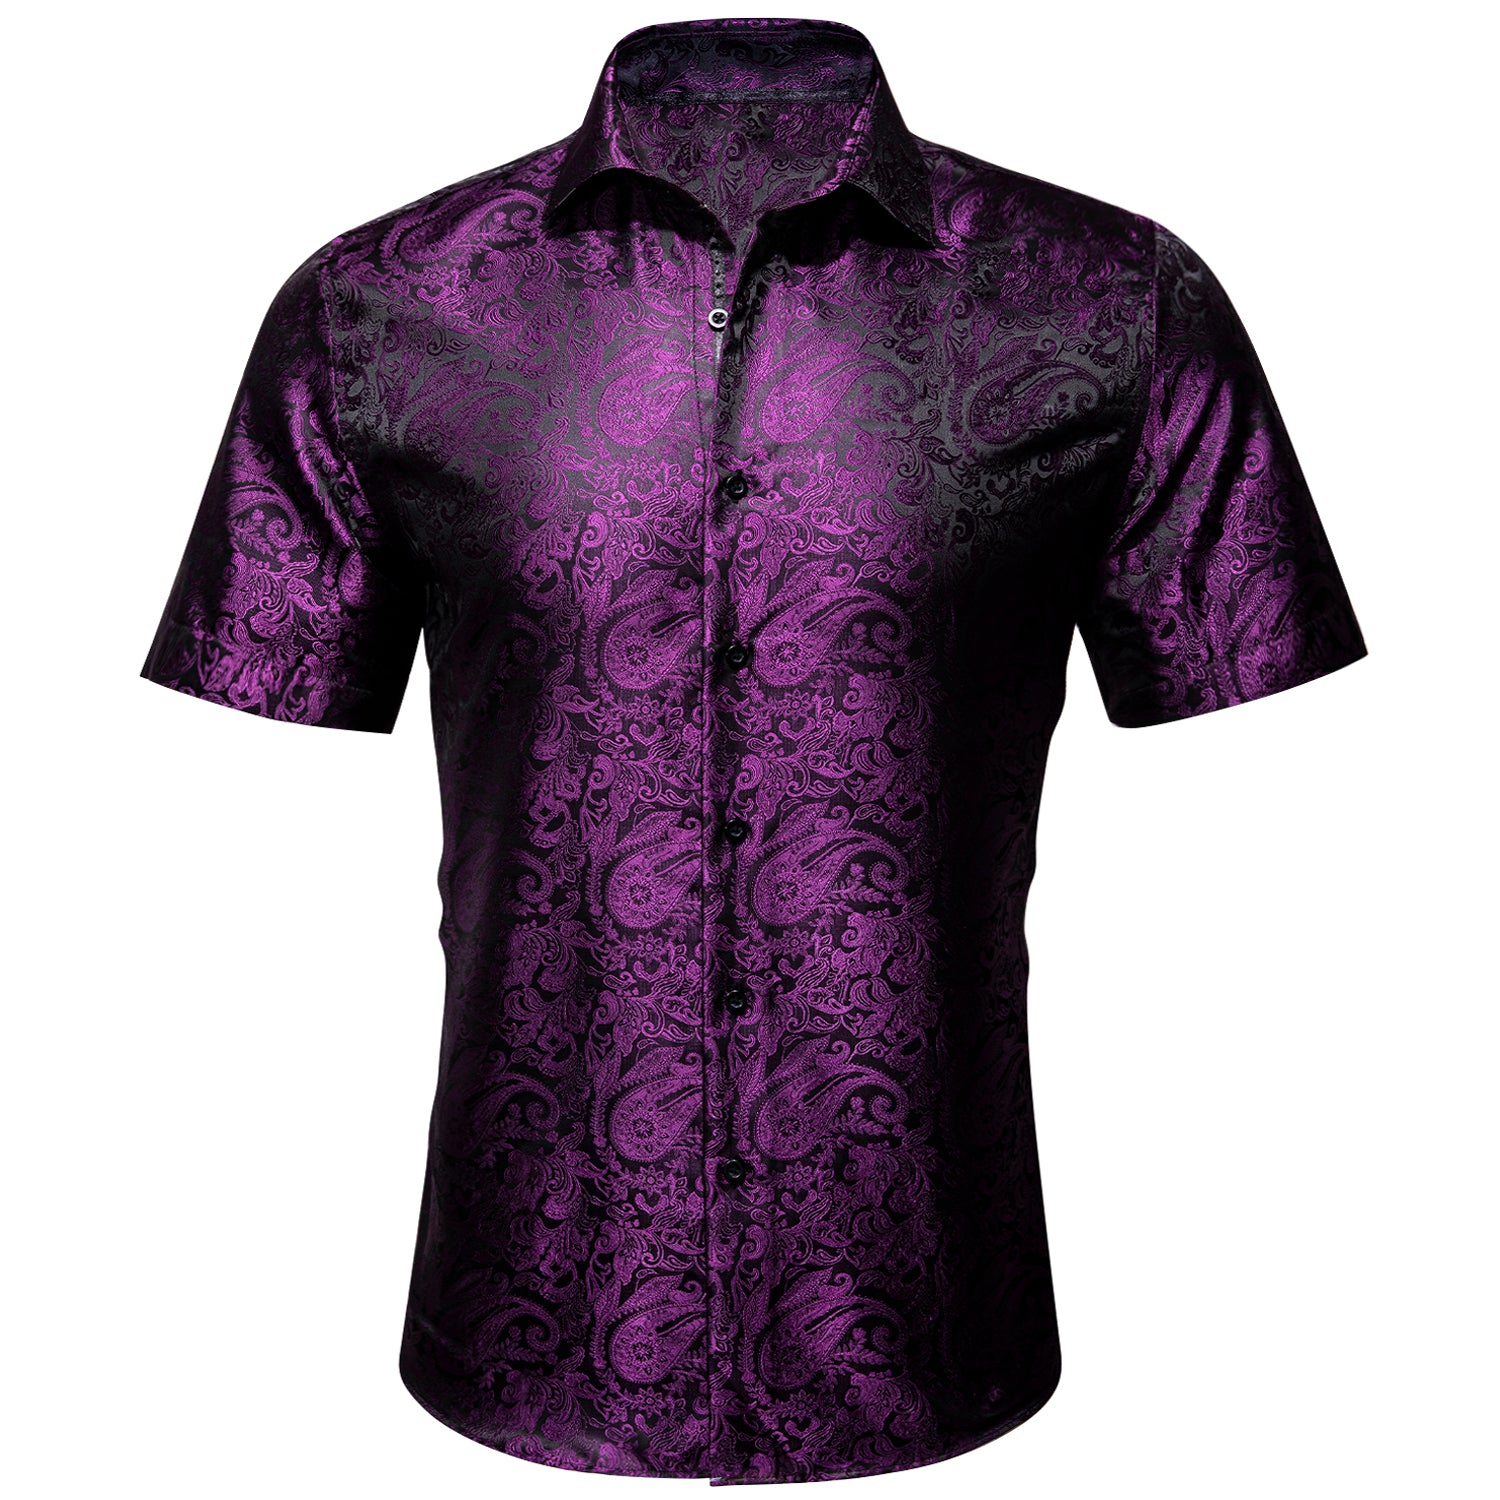 Barry.wang New Purple Silk Paisley Short Sleeve Daily Slim Fit Men's Shirt